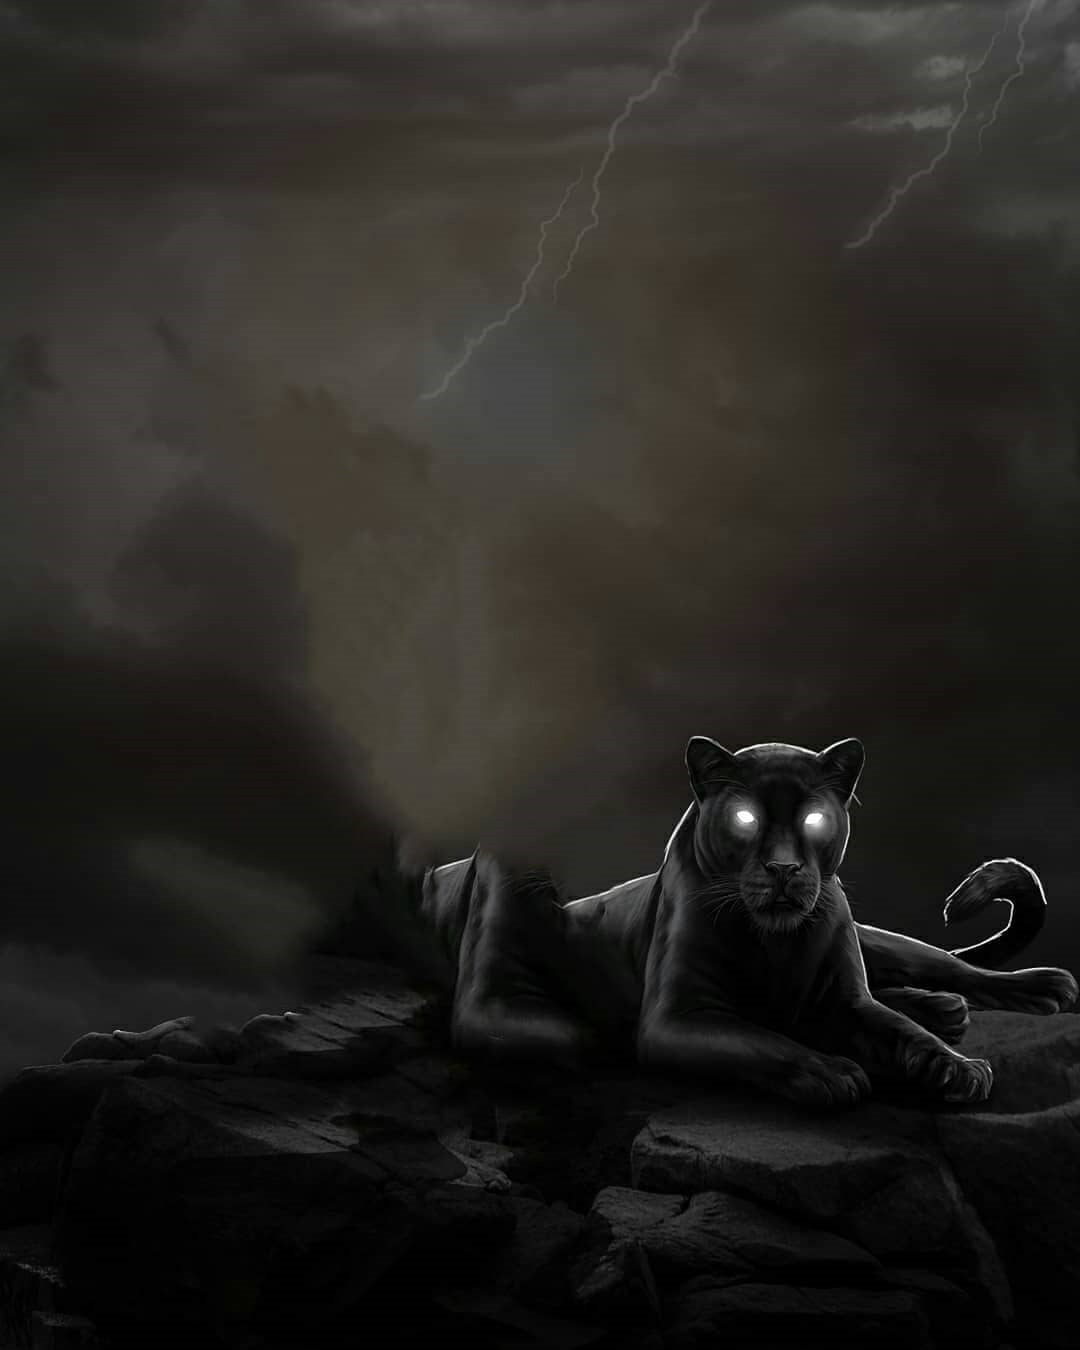 🔥 Black Panther PicsArt Editing HD Background | CBEditz